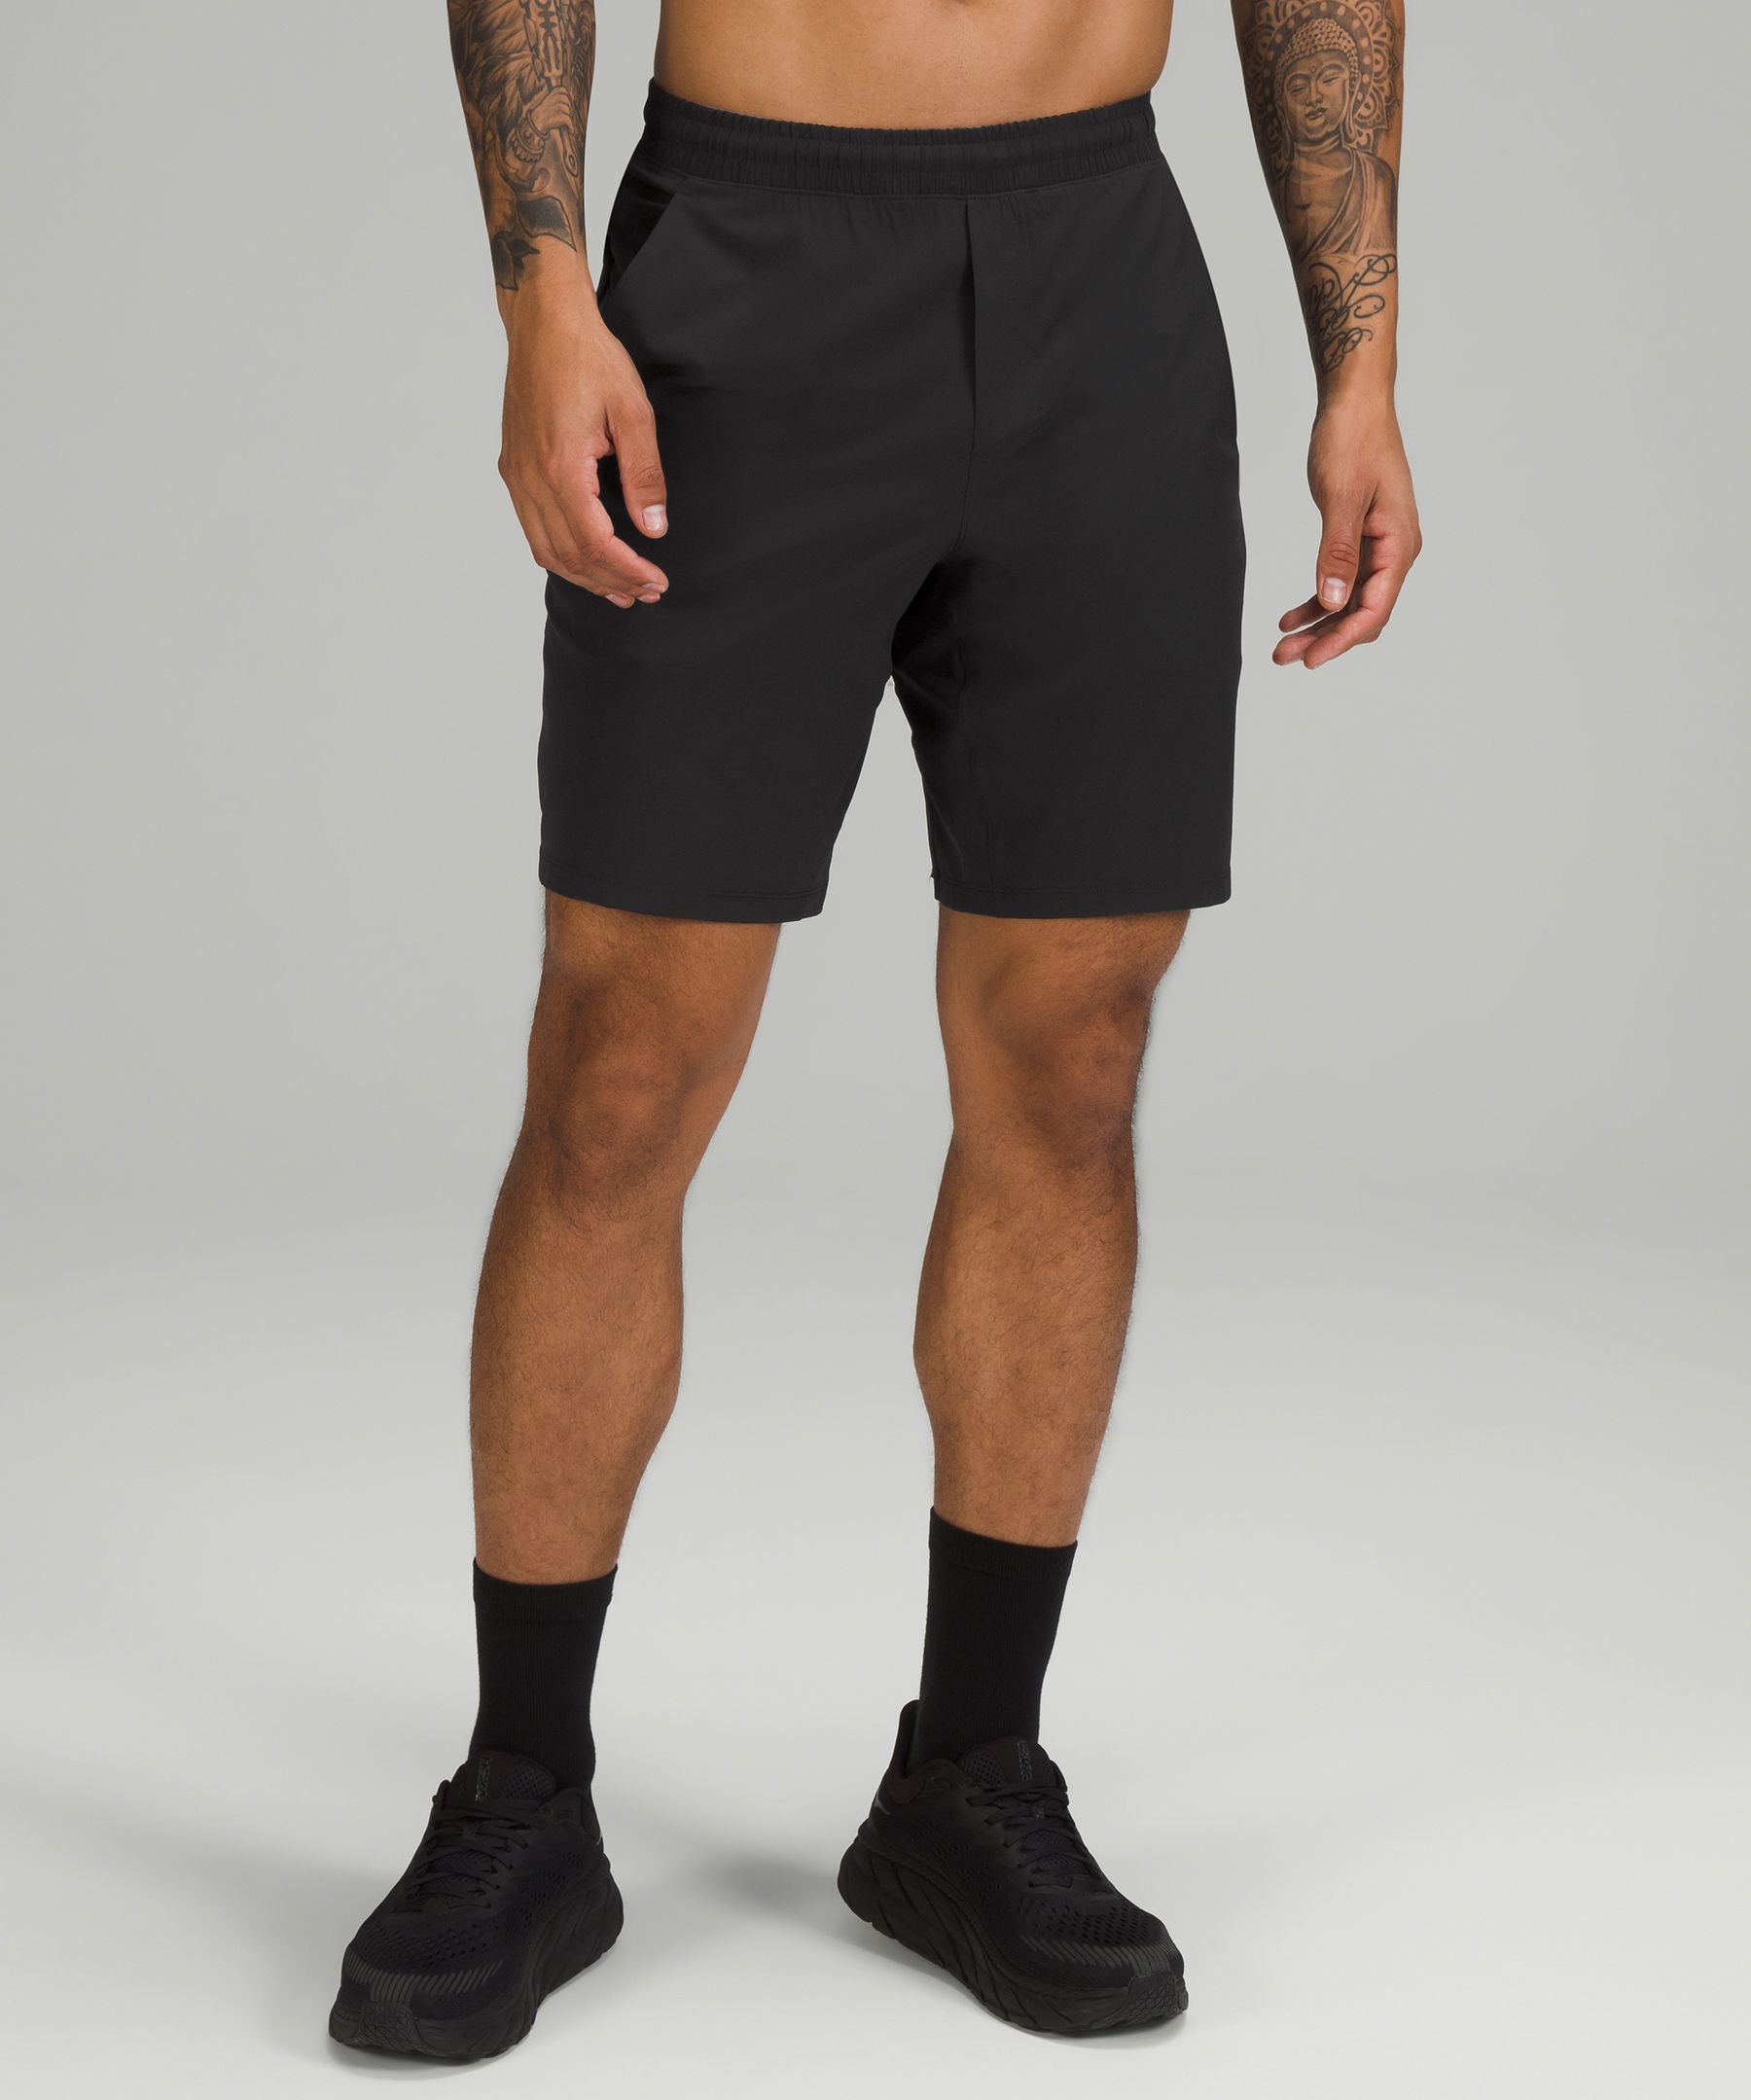 lululemon athletica men's shorts